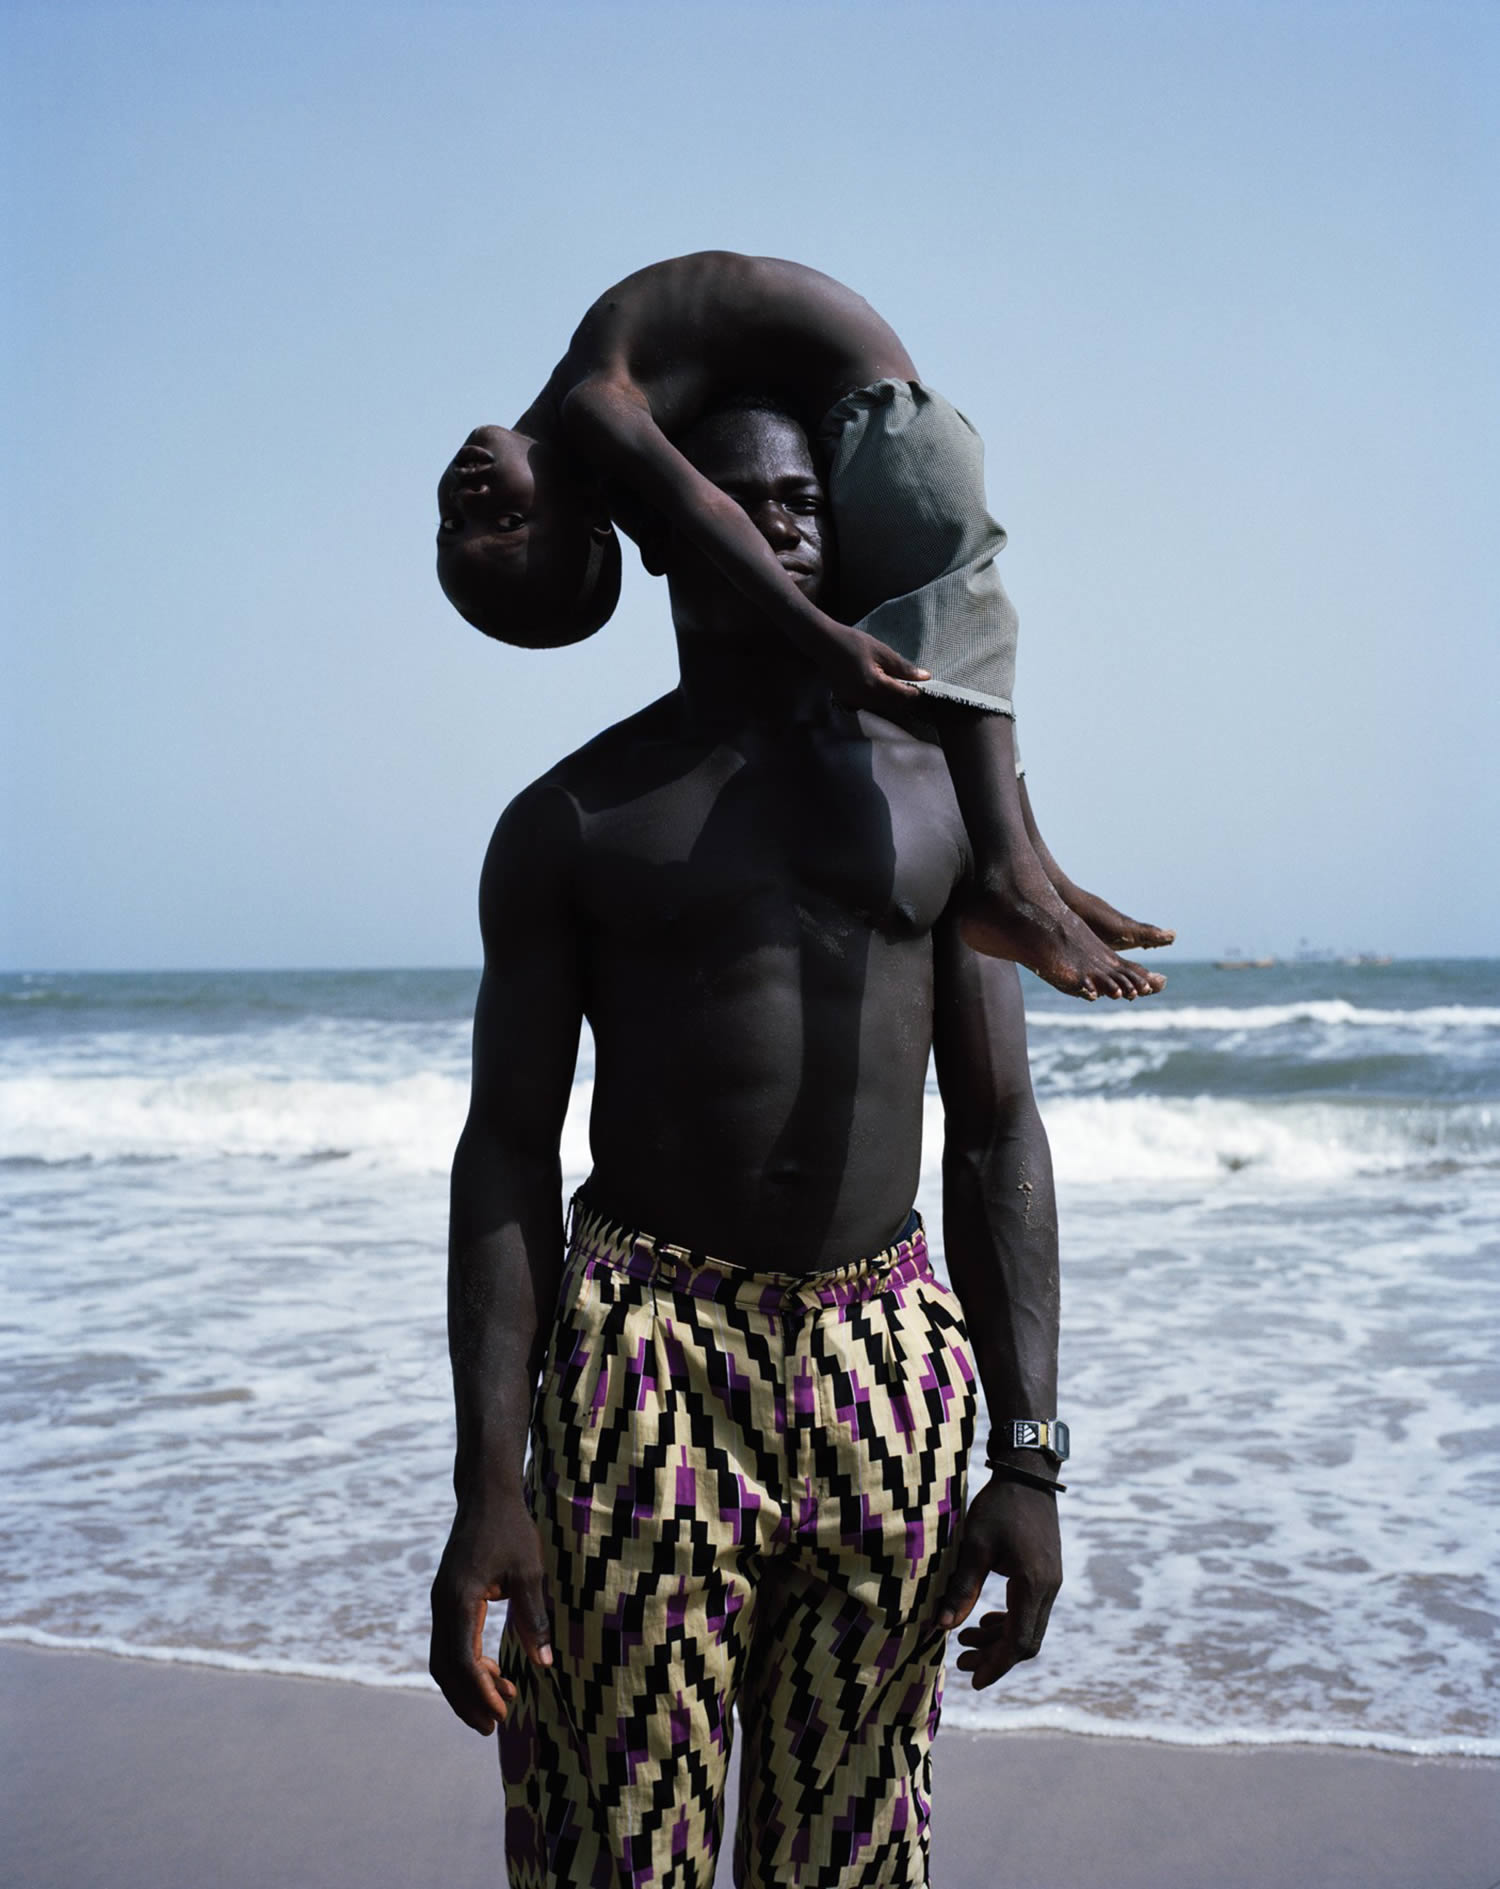 child over man's head, clinging, photo by viviane sassen